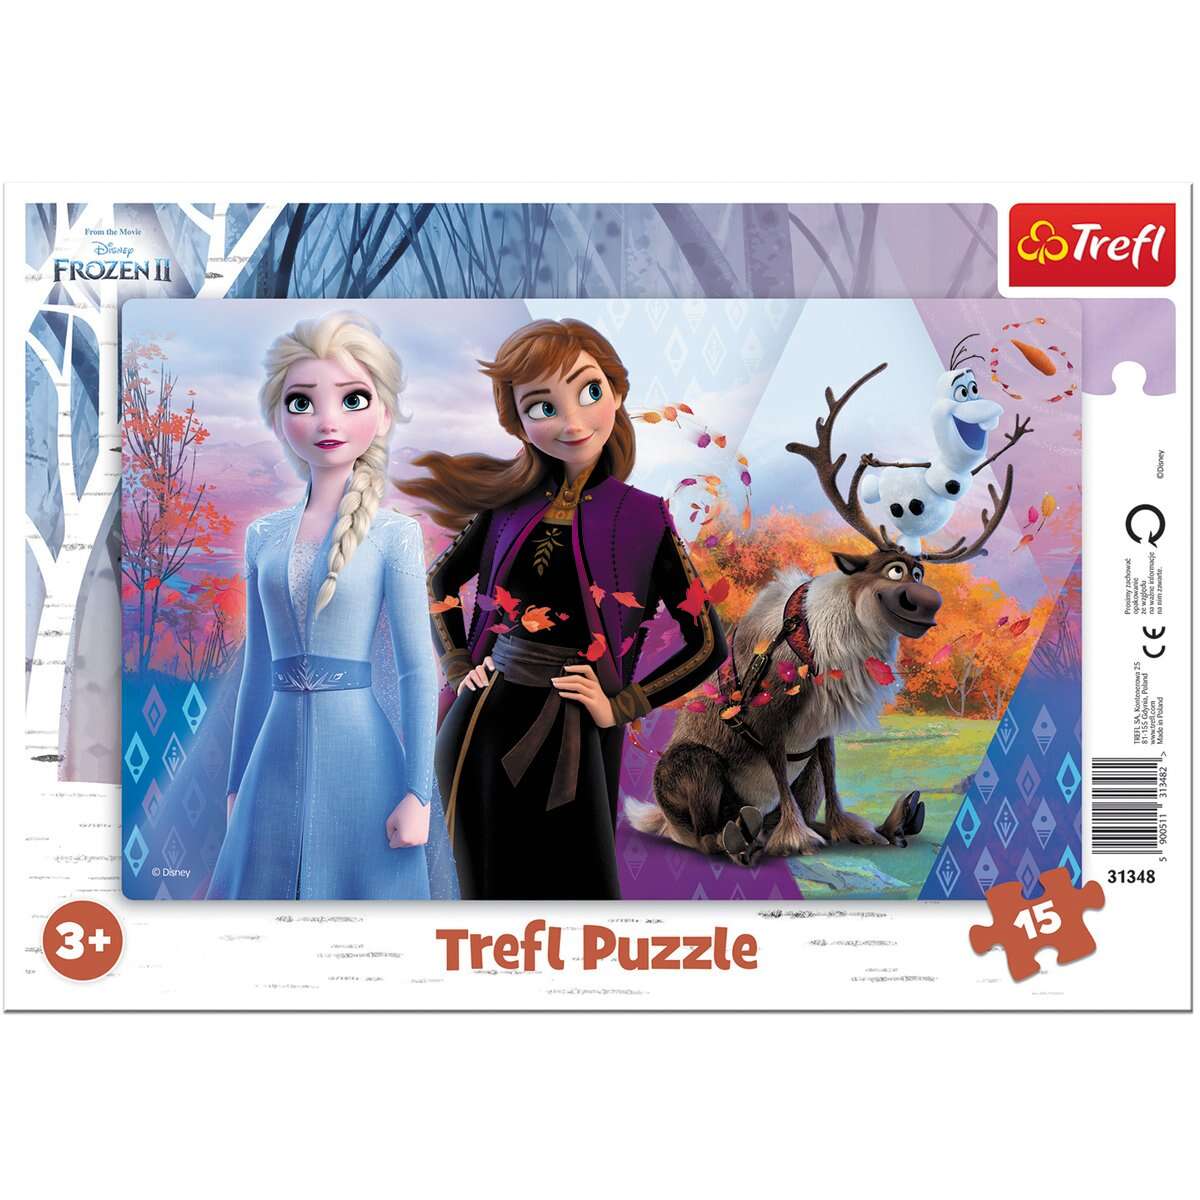 Puzzle Trefl 15 piese in rama, Lumea magica a Annei si Elsei, Disney Frozen 2